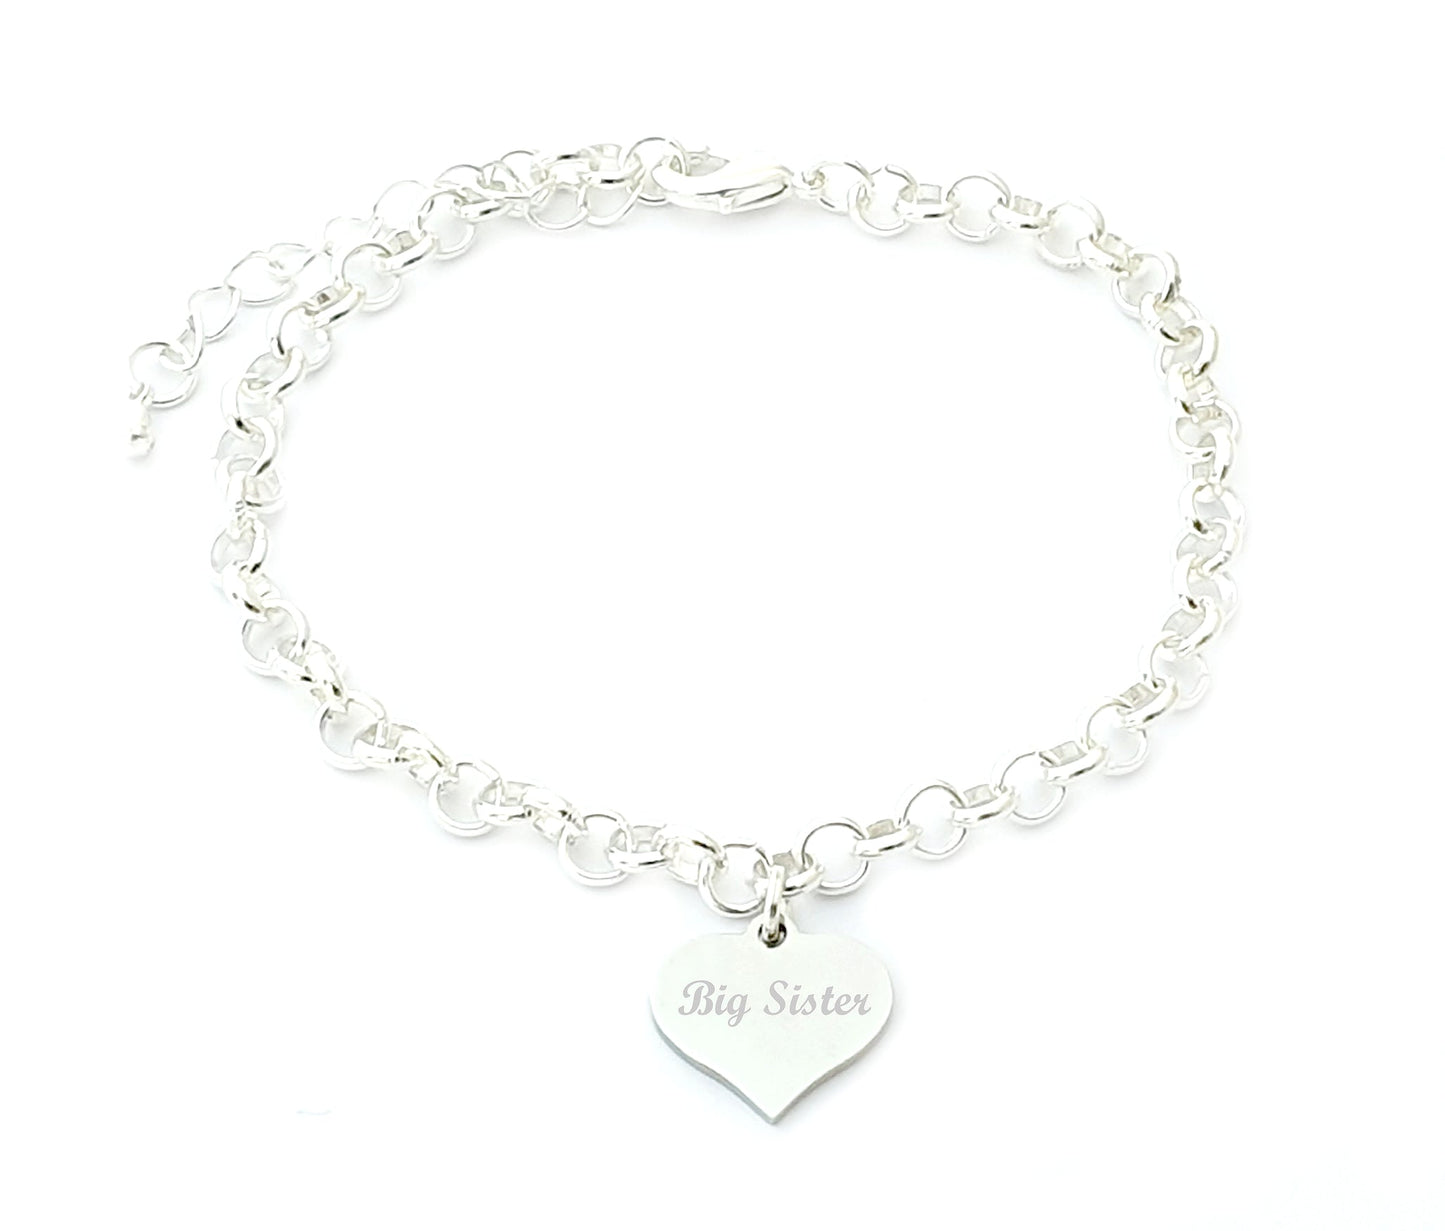 Big Sister Engraved Heart Charm Link Bracelet, Gift for Girl's and Women